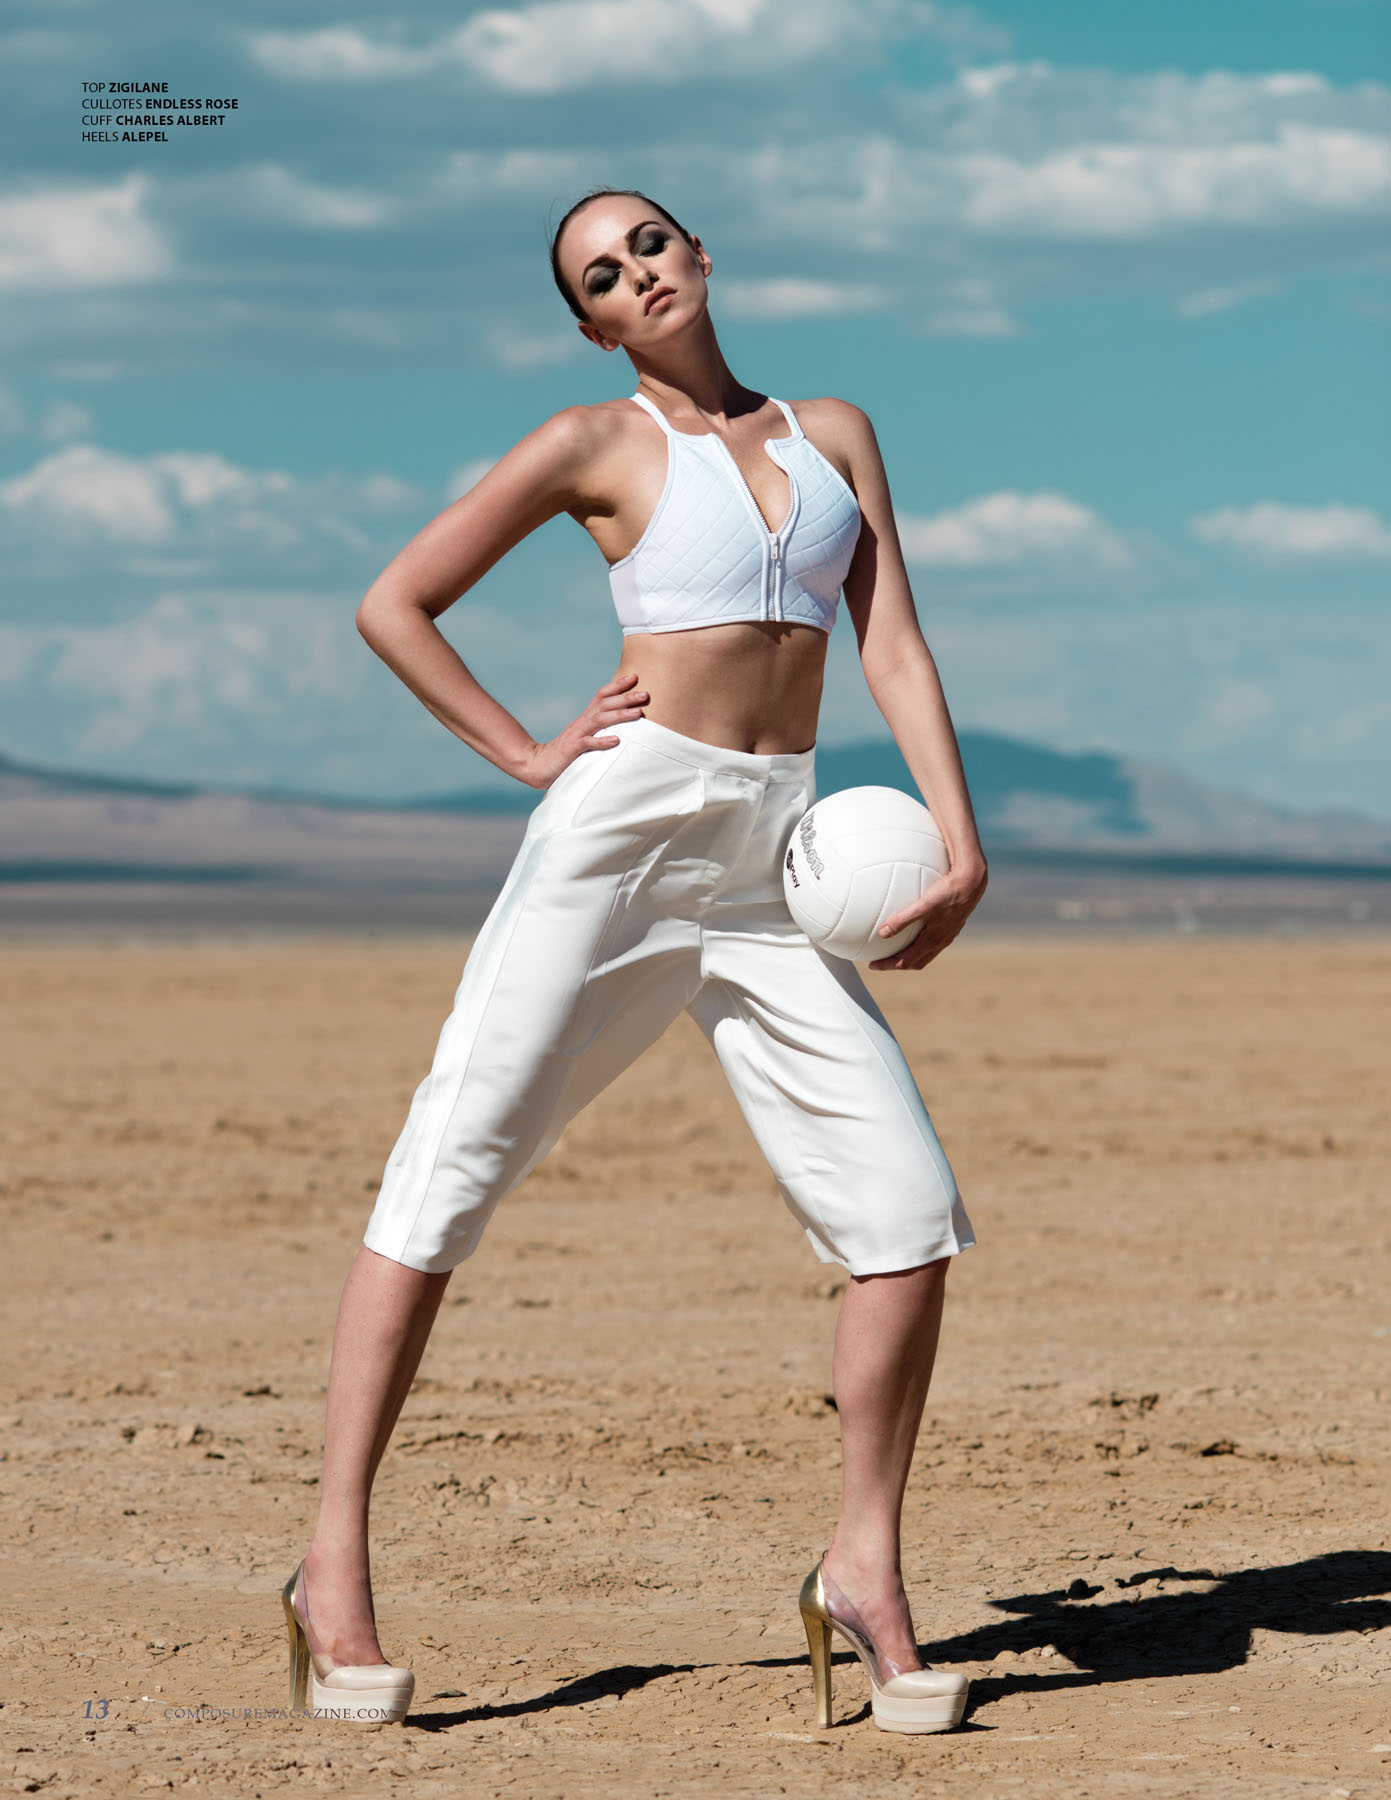 Athletic Desert Fashion Editorial by John Hong